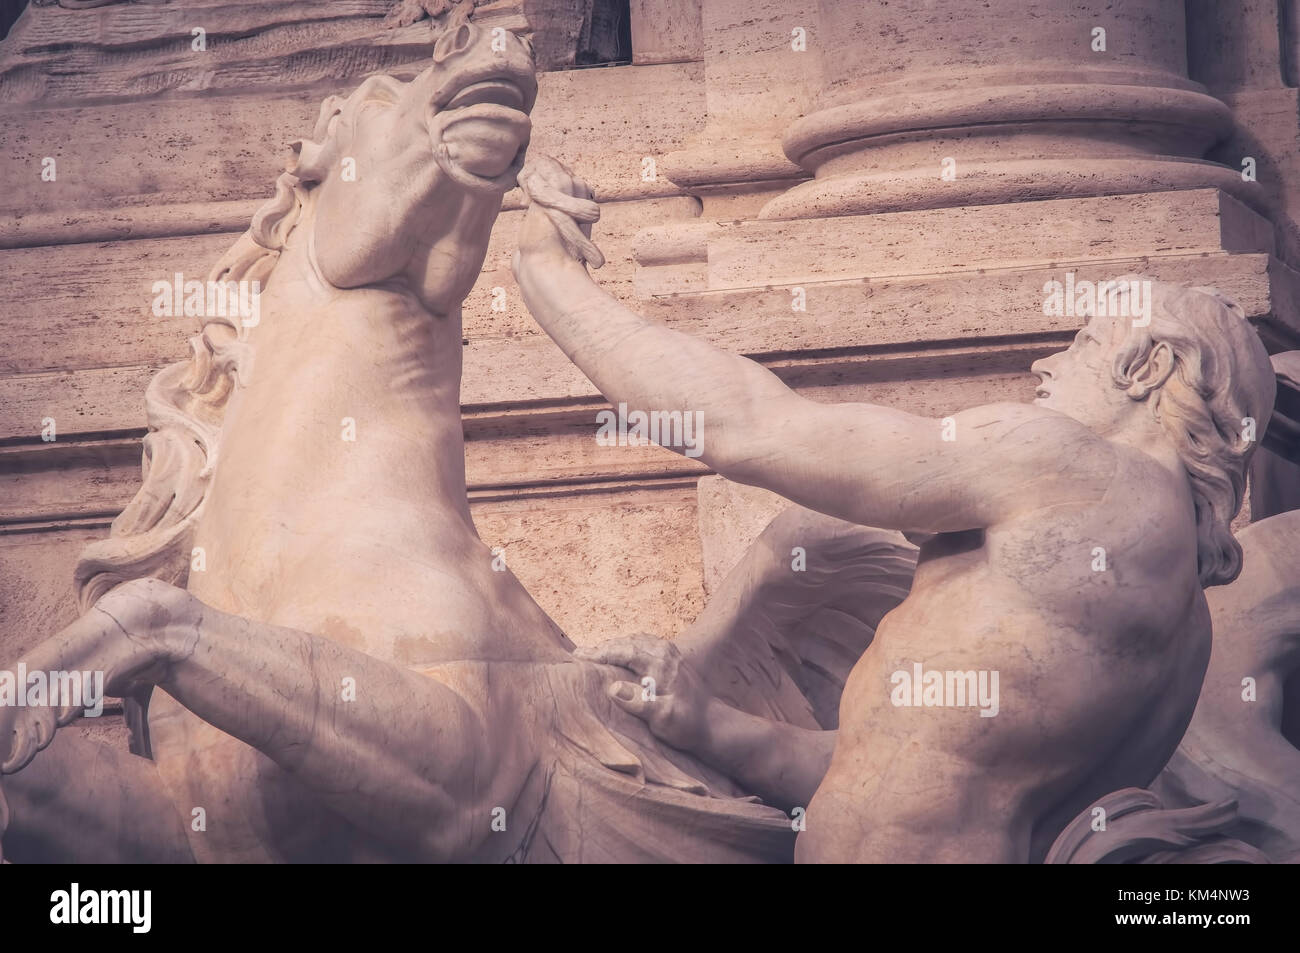 horse agitated, the Trevi Fountain. Stock Photo